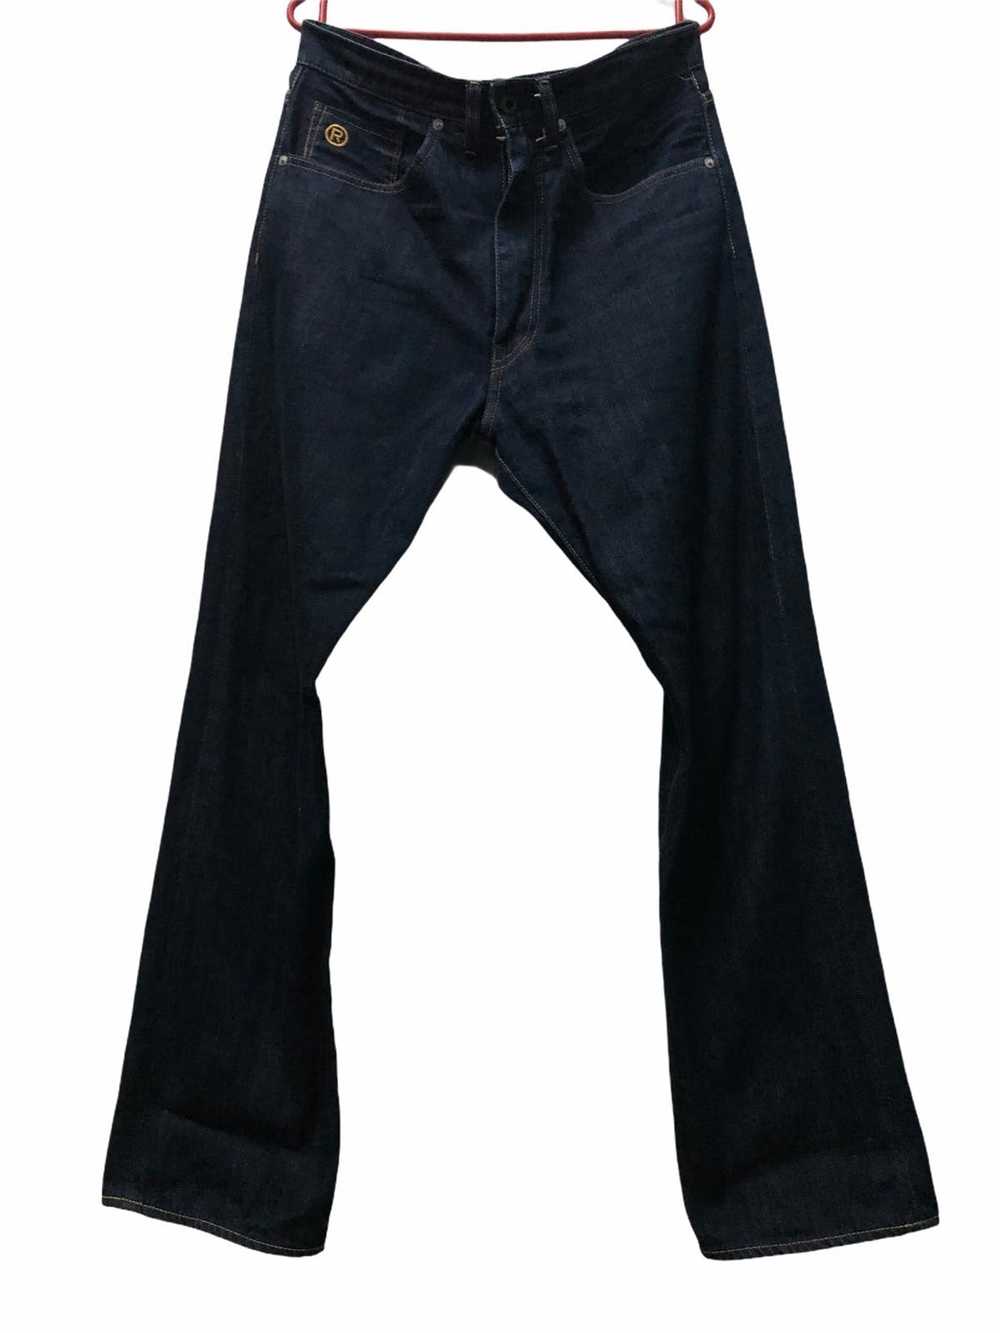 Bape Bape Jeans Selvedge - image 1